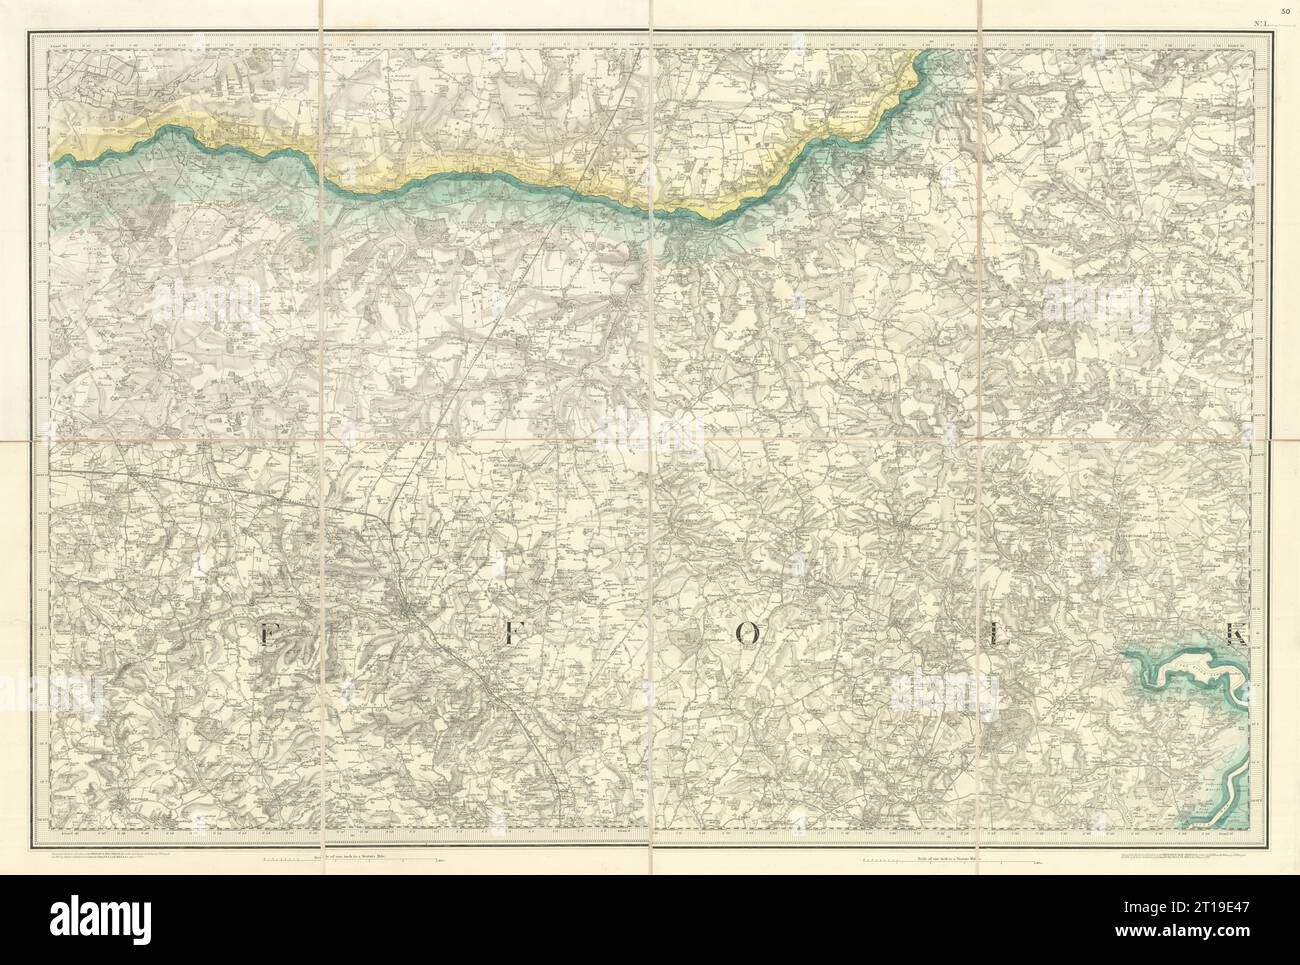 OS #50 High Suffolk Claylands. Eye lxworth Harleston Diss Stowmarket 1837 map Stock Photo